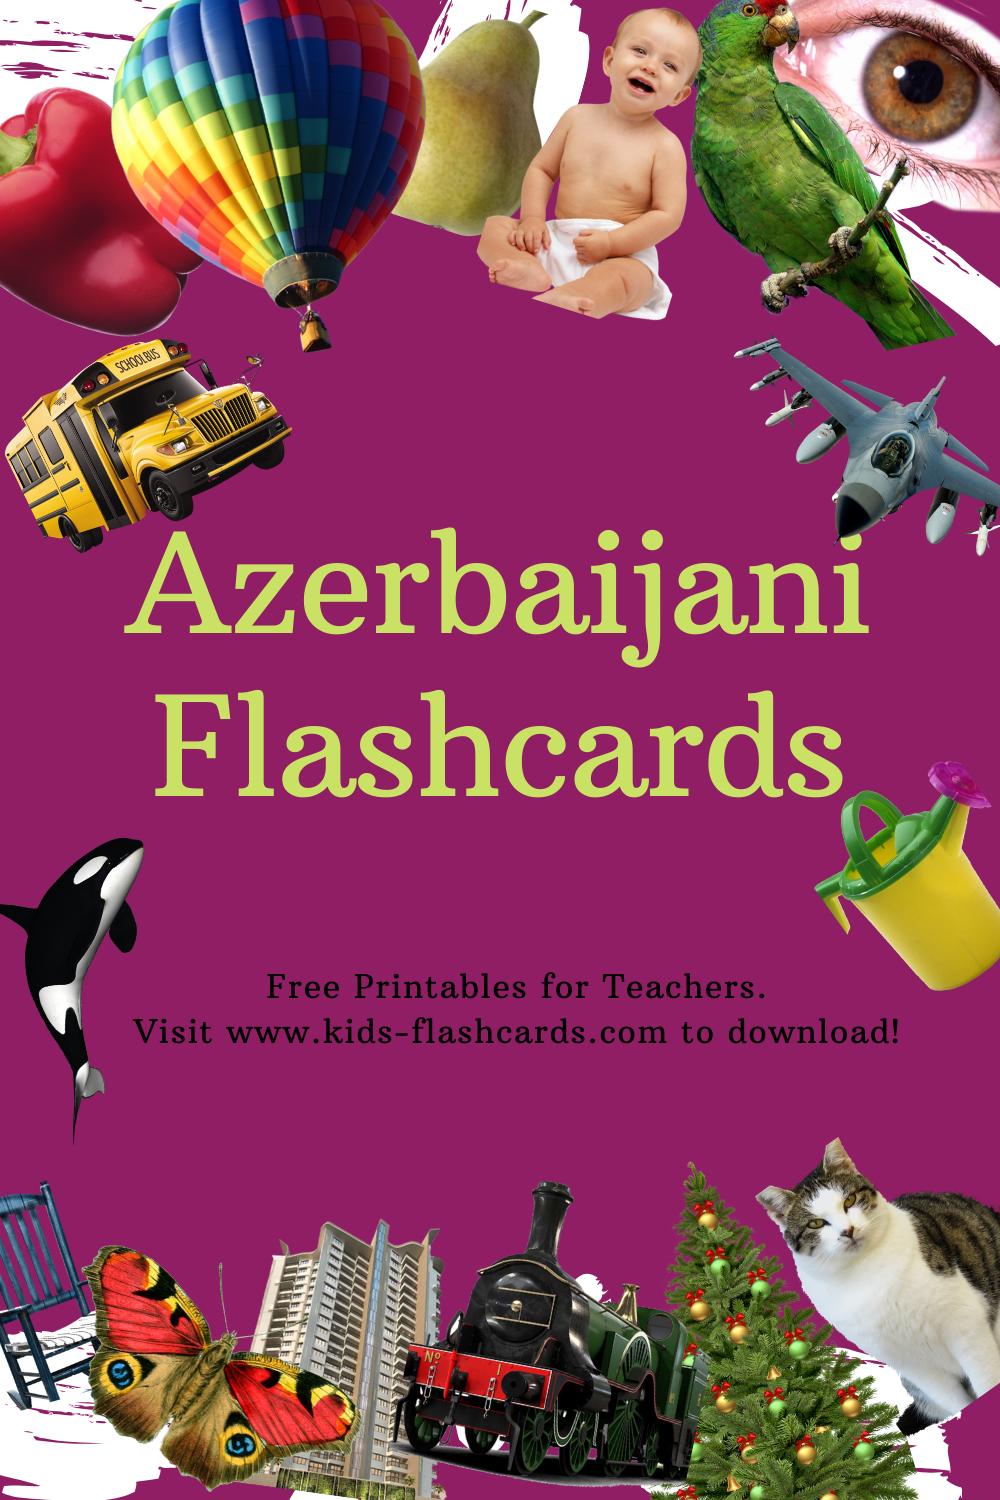 Worksheets to learn Azerbaijani language